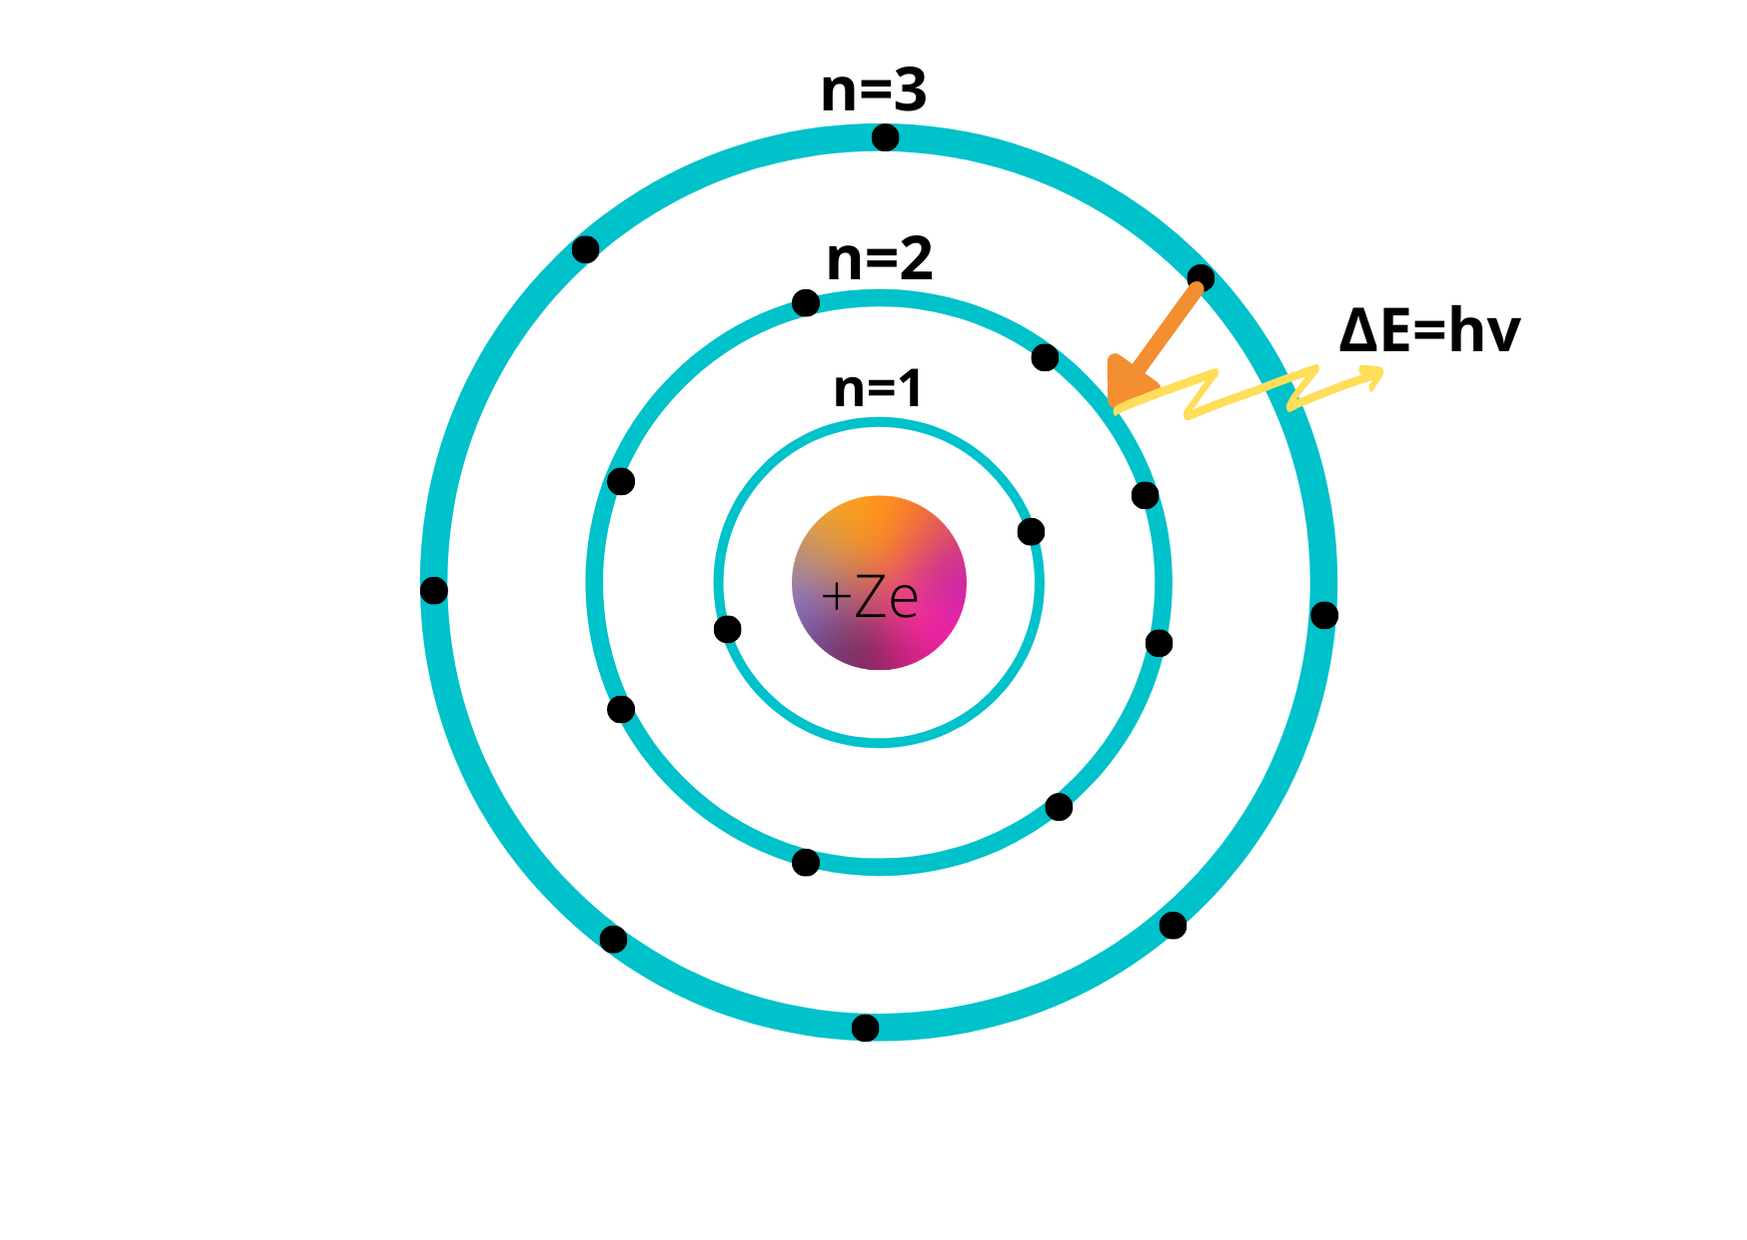 bohrs atomic model